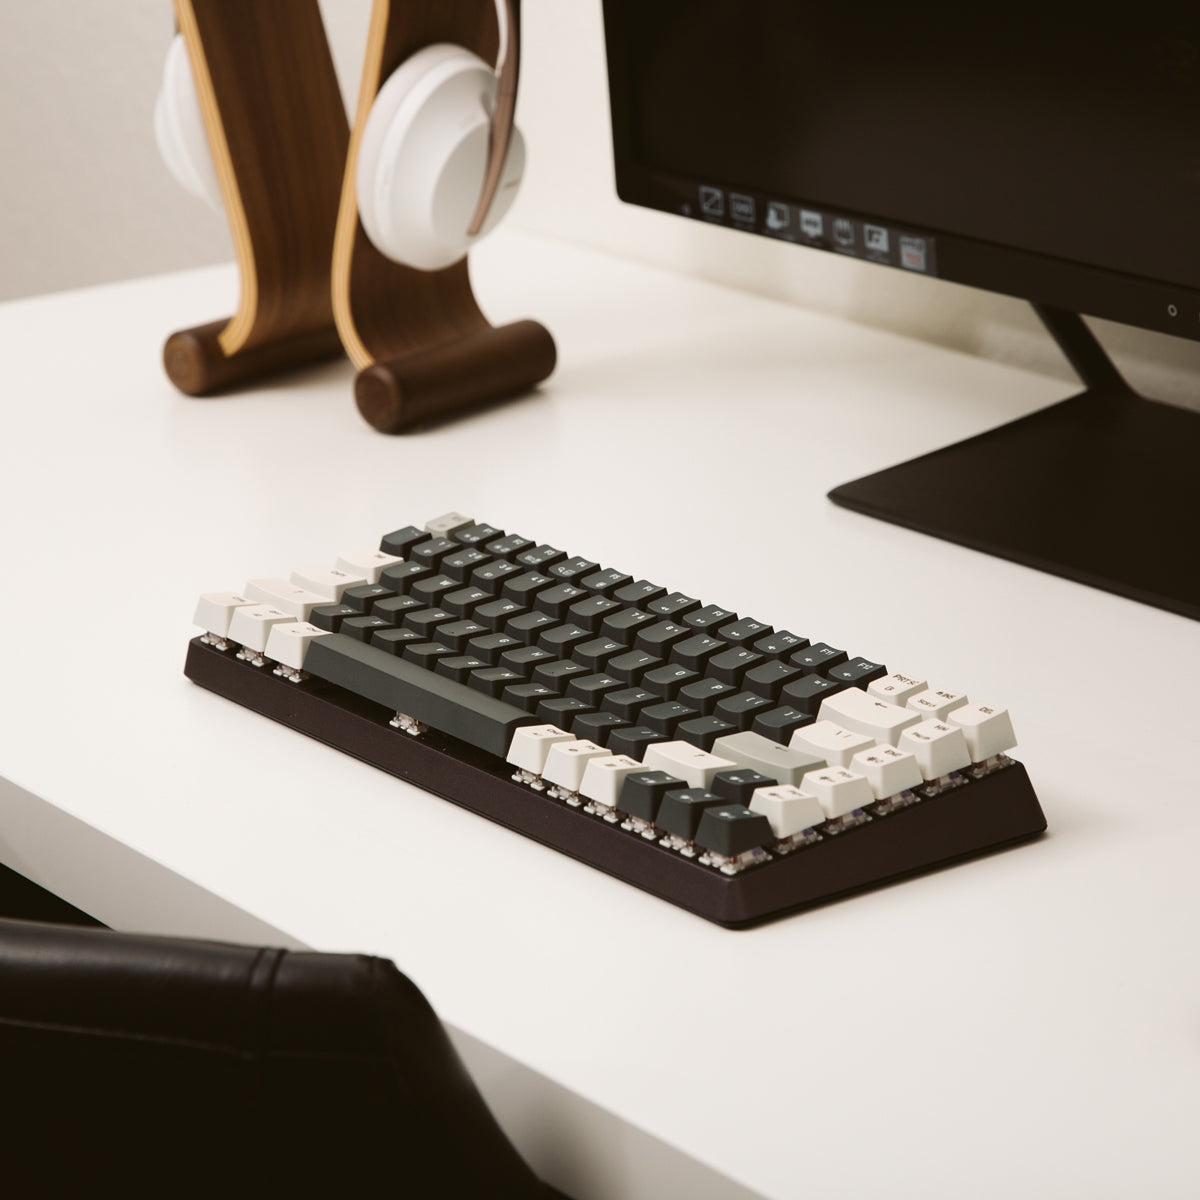 Cascade 75 % kabellose Hot-Swap-fähige Tastatur